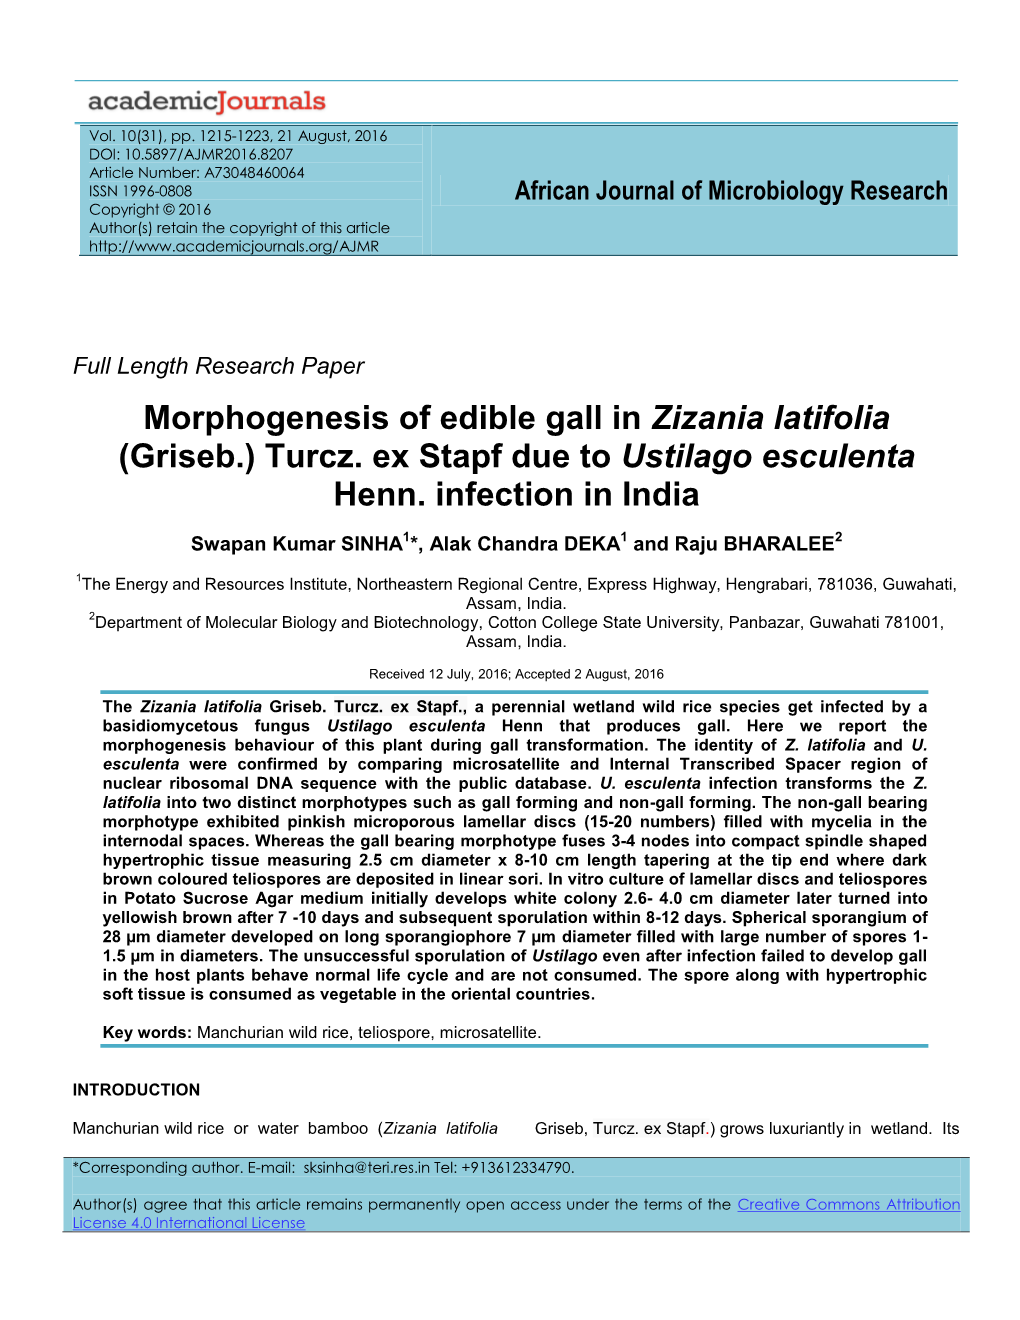 Morphogenesis of Edible Gall in Zizania Latifolia (Griseb.) Turcz. Ex Stapf Due to Ustilago Esculenta Henn